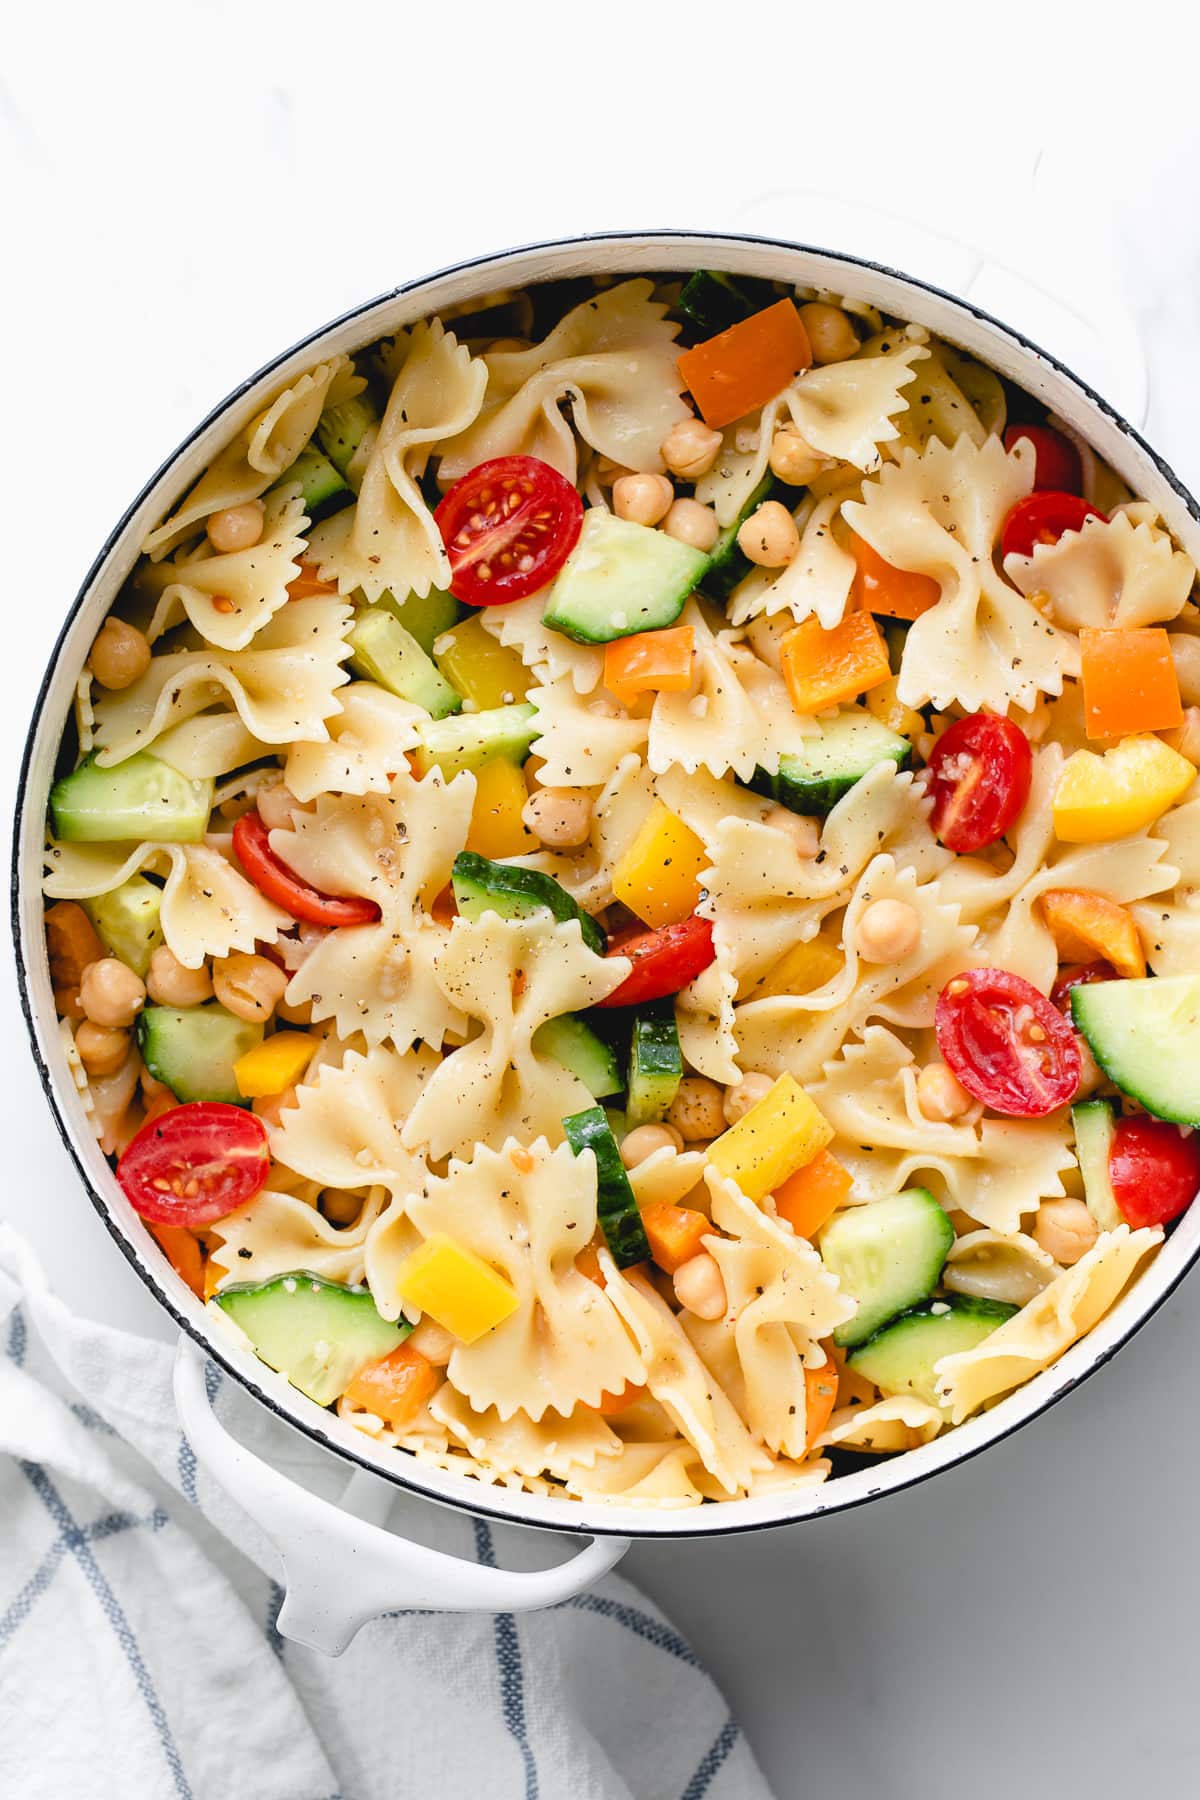 Cold Pasta Salad Recipes: Easy and Delicious Ideas!